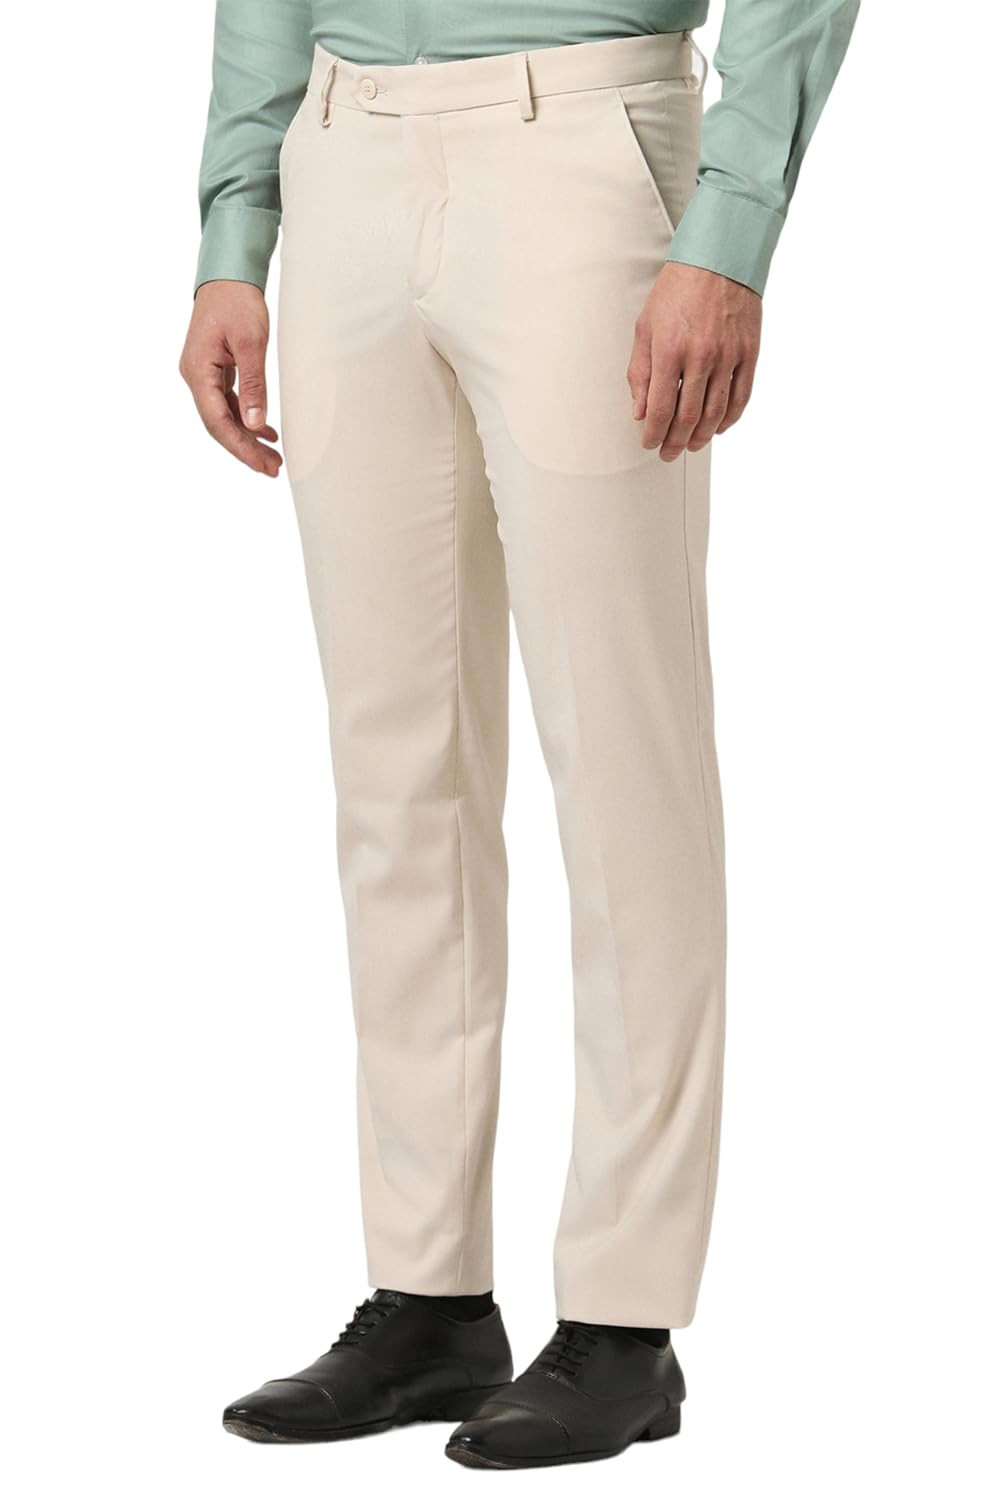 Buy Peter England Men's Slim Casual Pants (PCTFSSSFR59470_Cream at Amazon.in